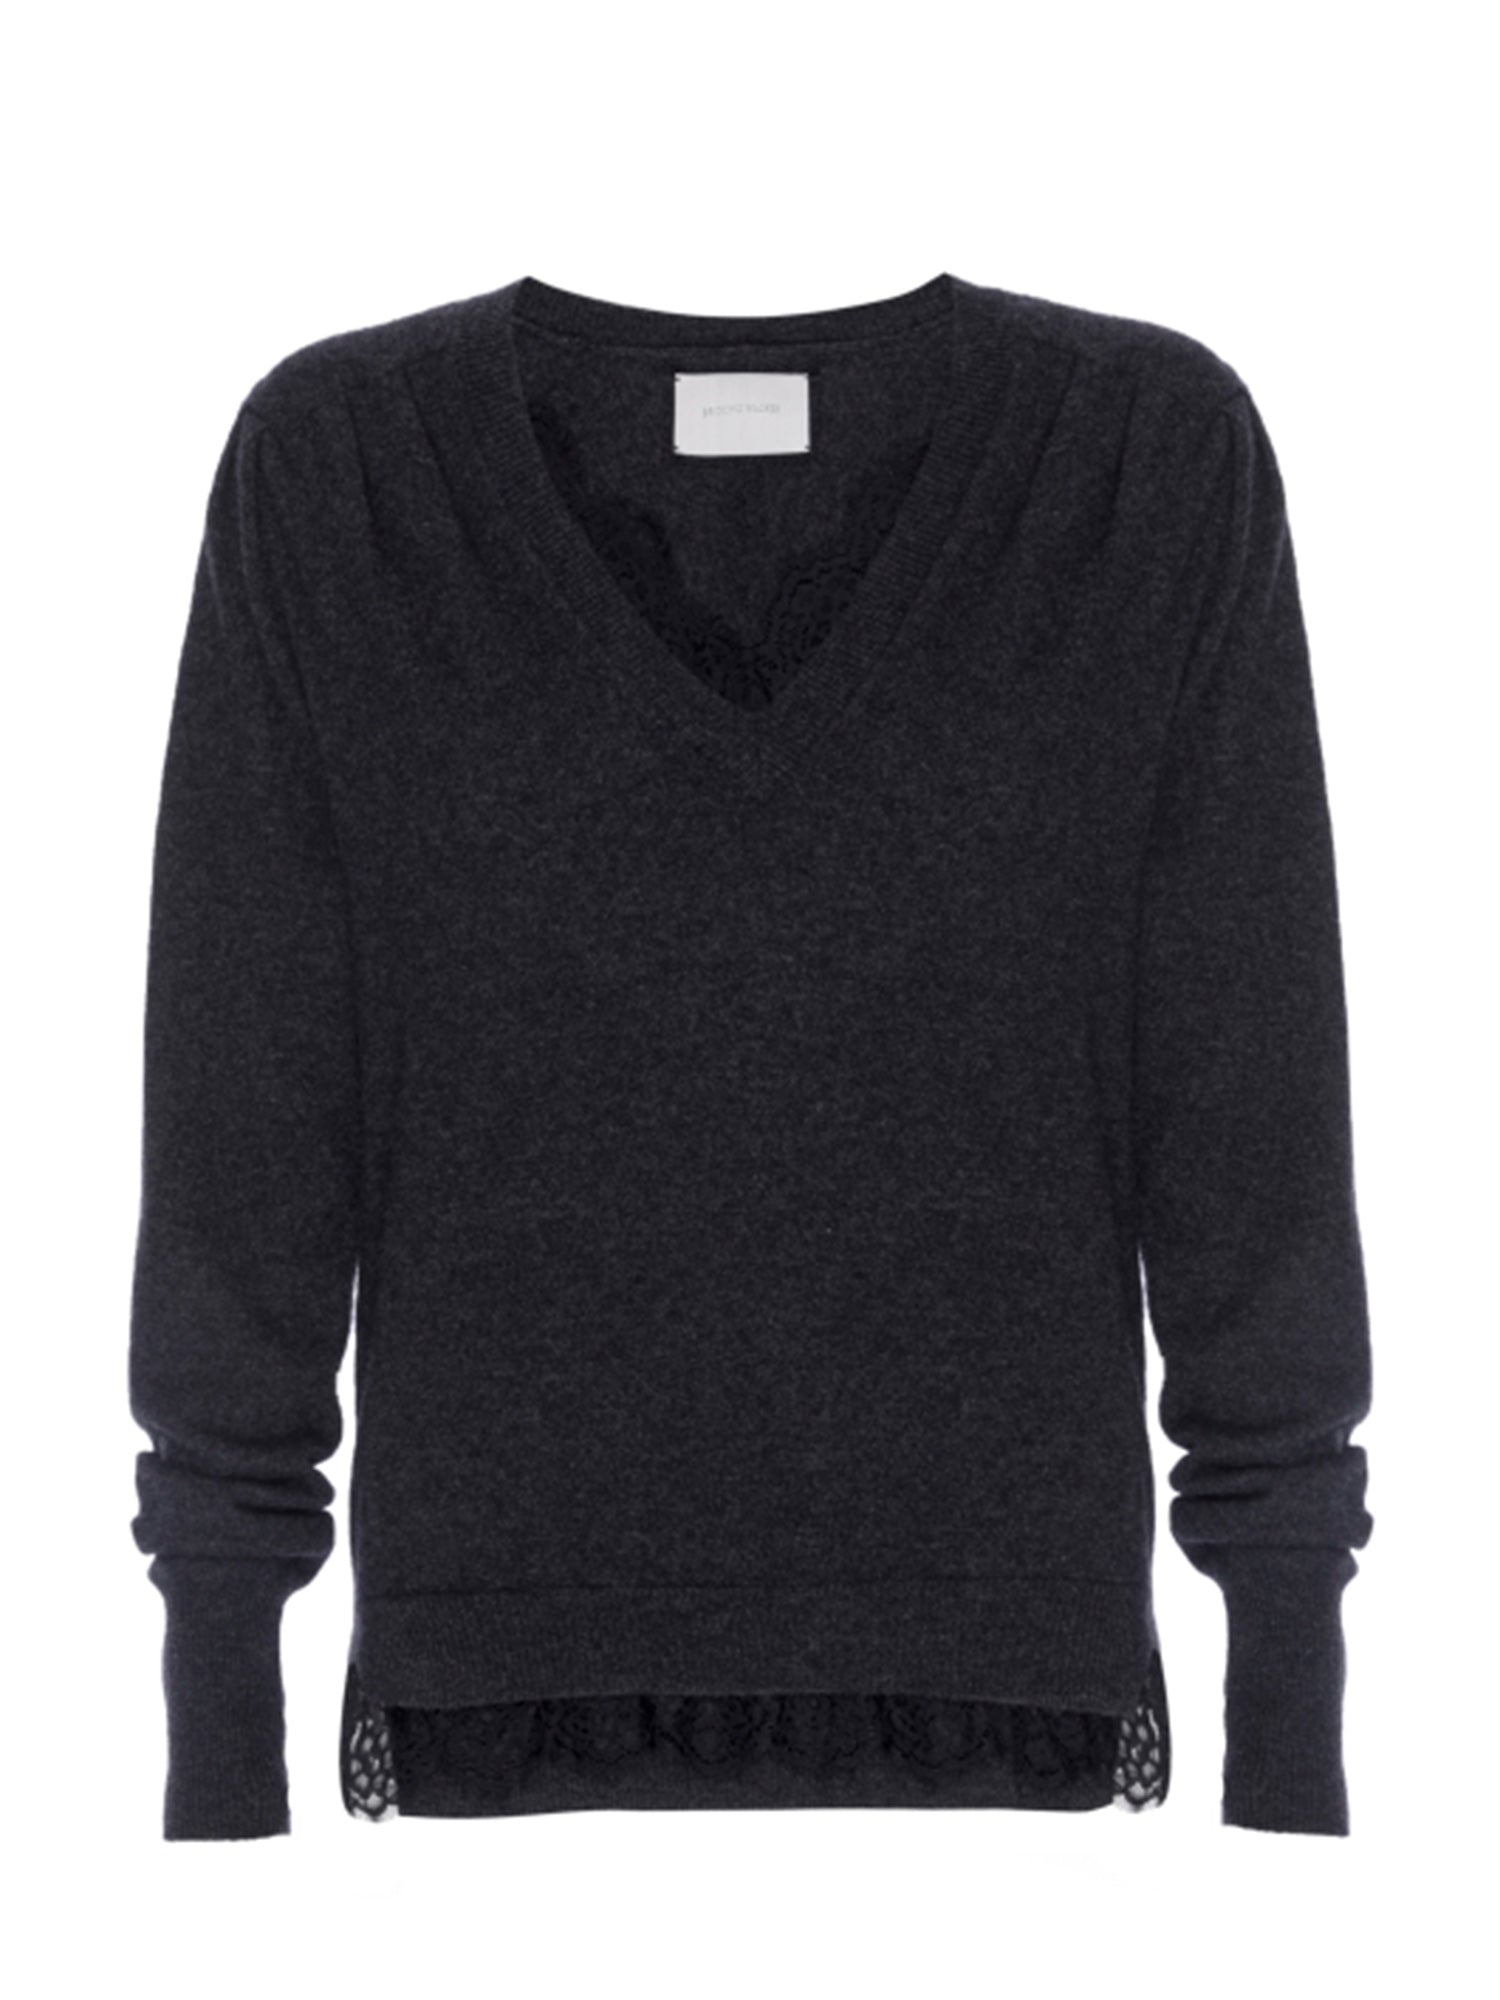 Women's Marcella Lace Vee Looker Sweater, Dark Charcoal/Black